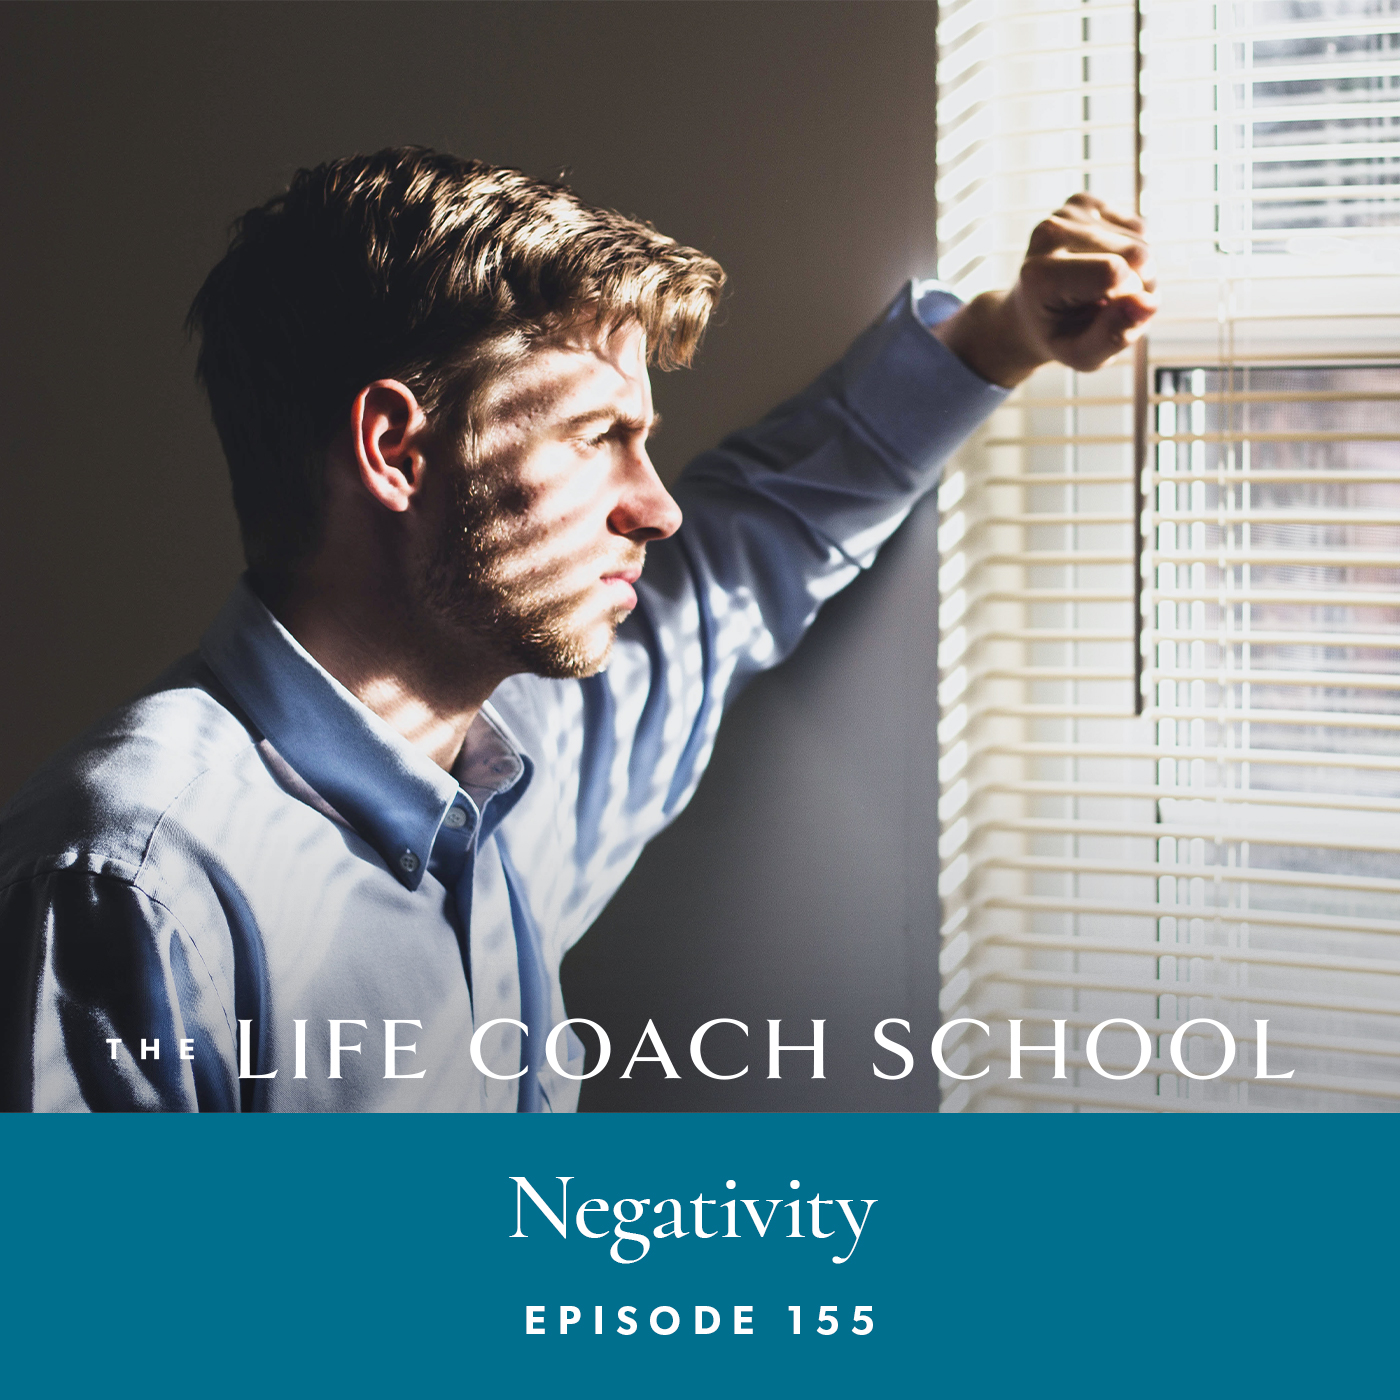 The Life Coach School Podcast with Brooke Castillo | Episode 155 | Negativity